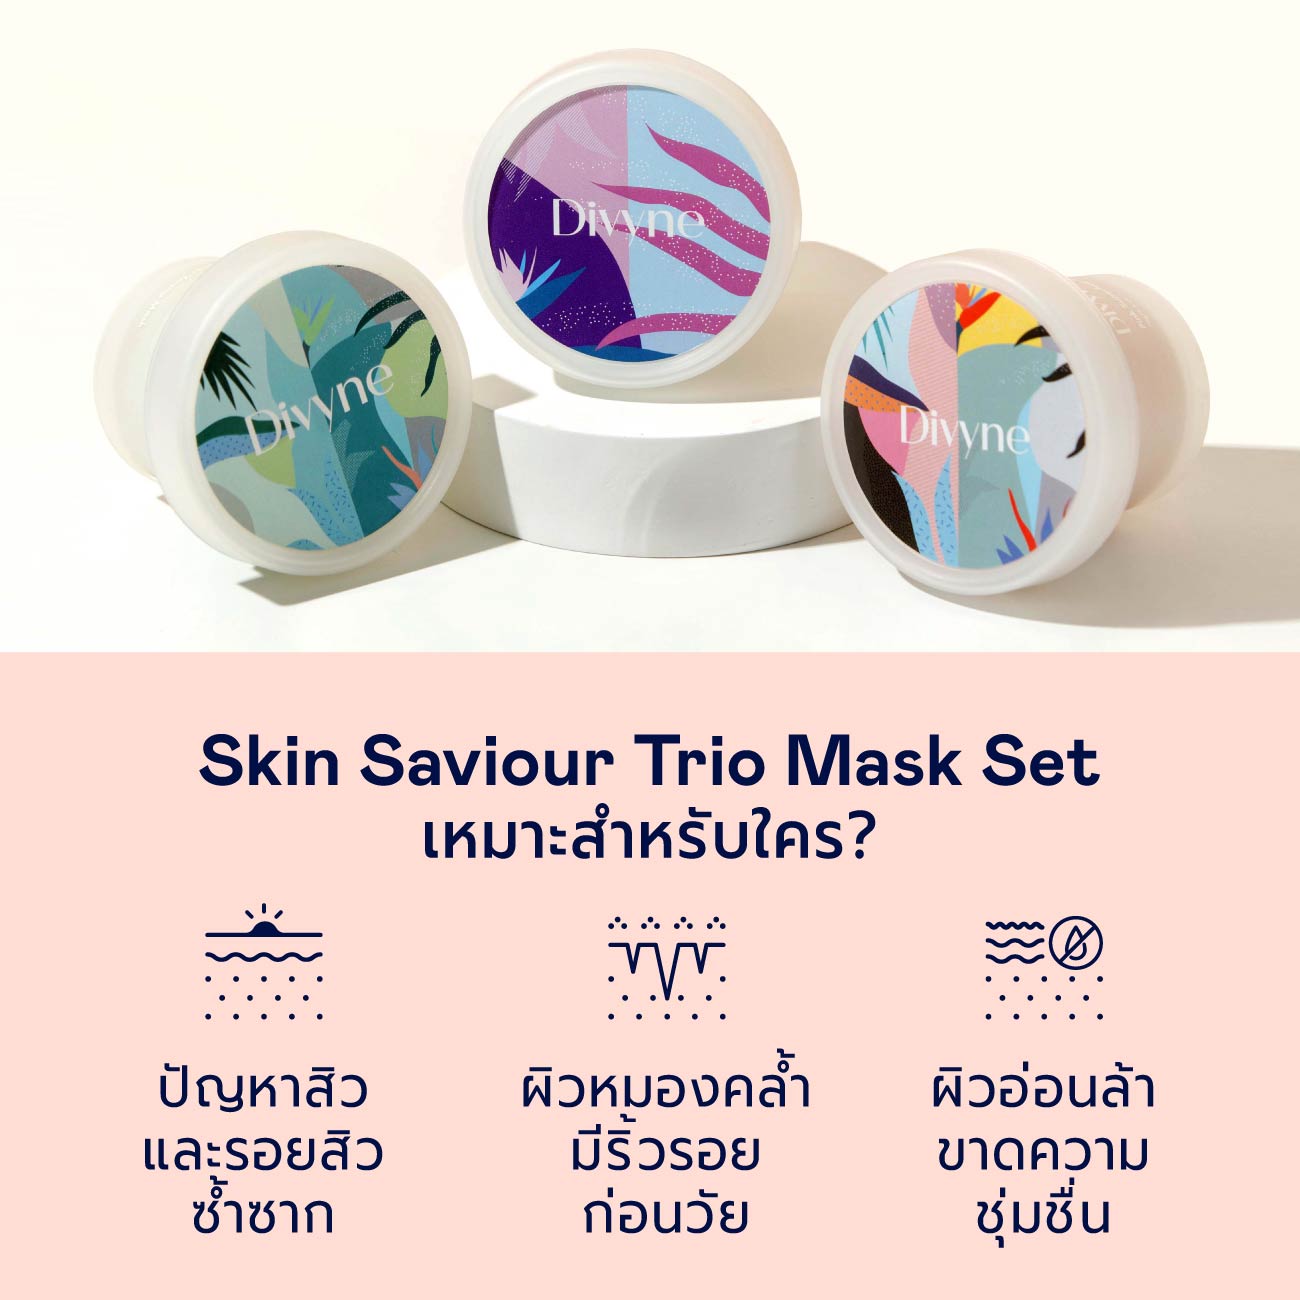 Skin Saviour Trio Mask Set